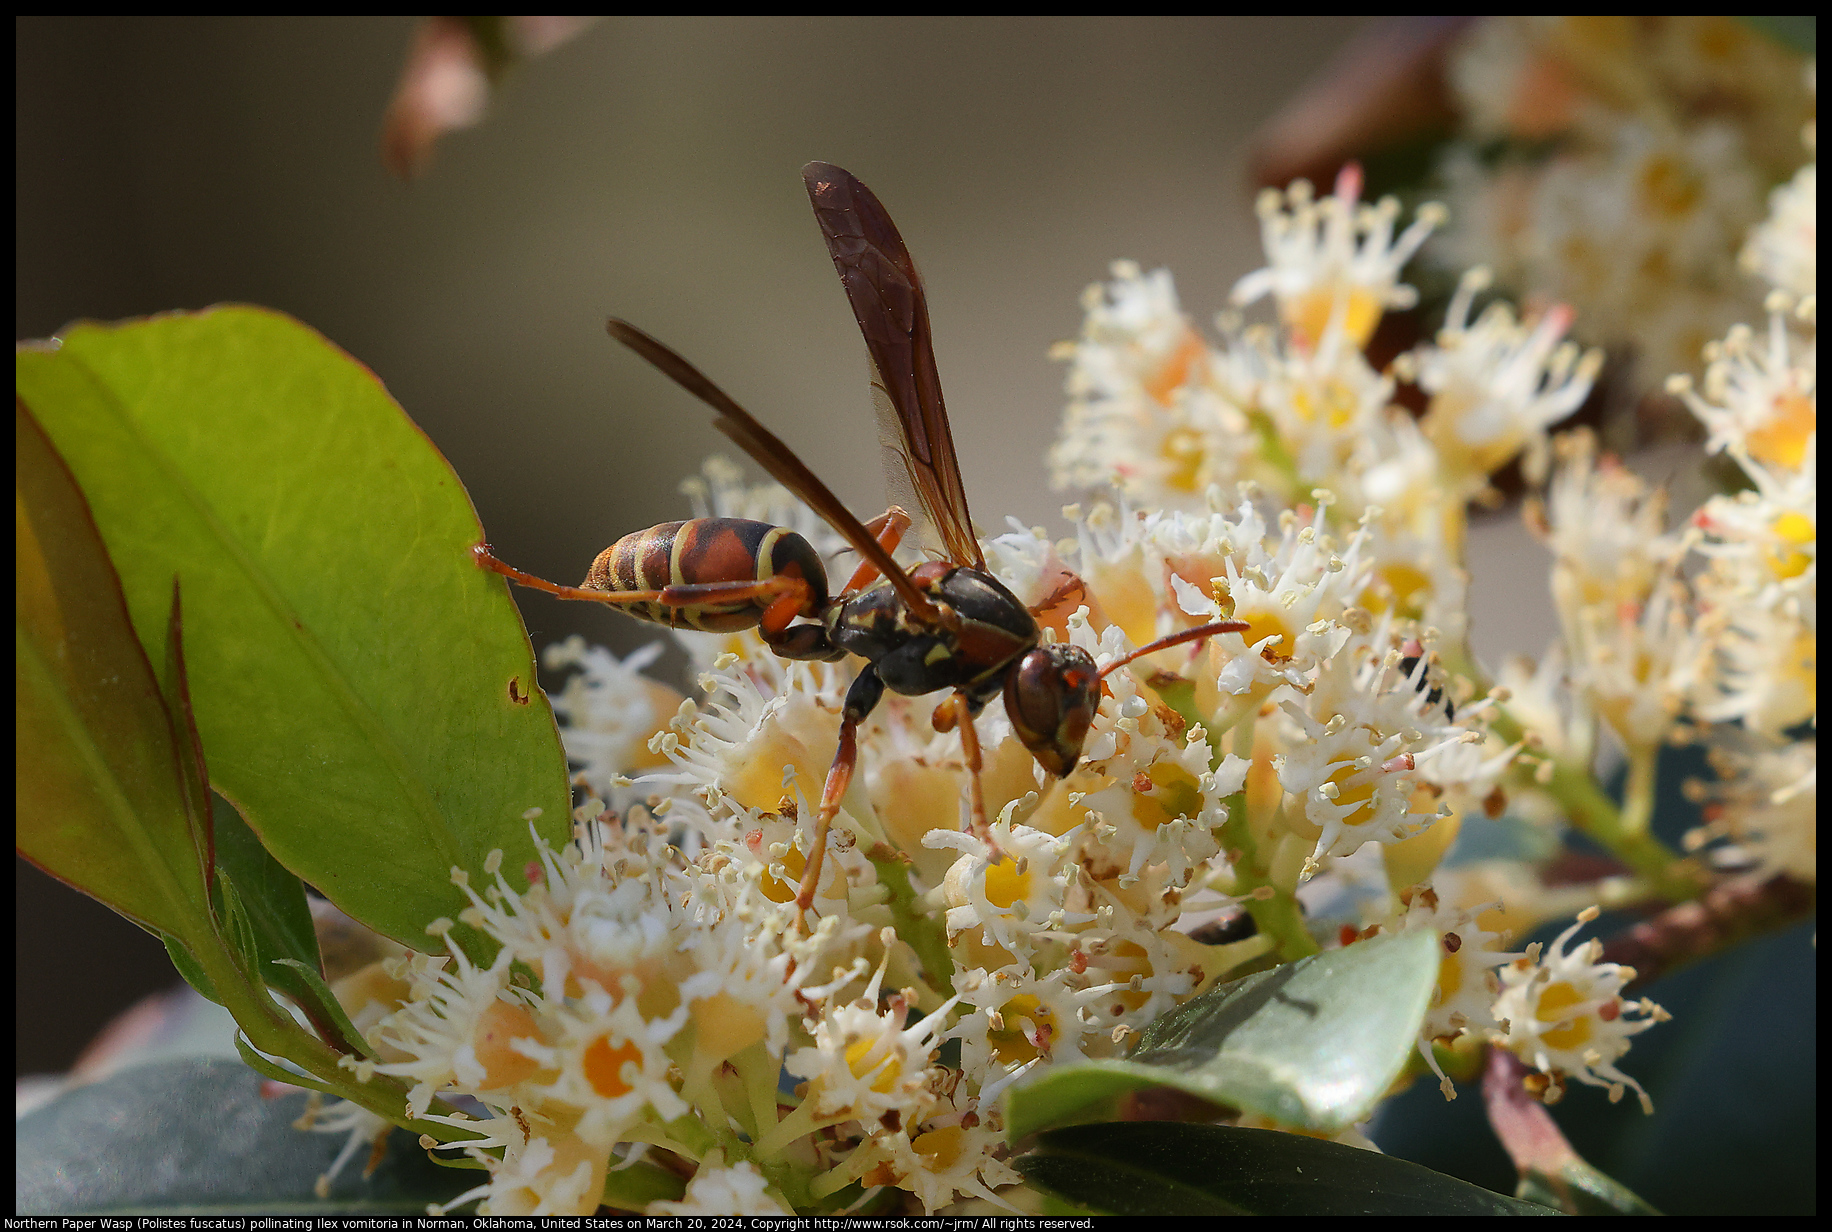 Northern Paper Wasp (Polistes fuscatus) pollinating Ilex vomitoria in Norman, Oklahoma, United States on March 20, 2024